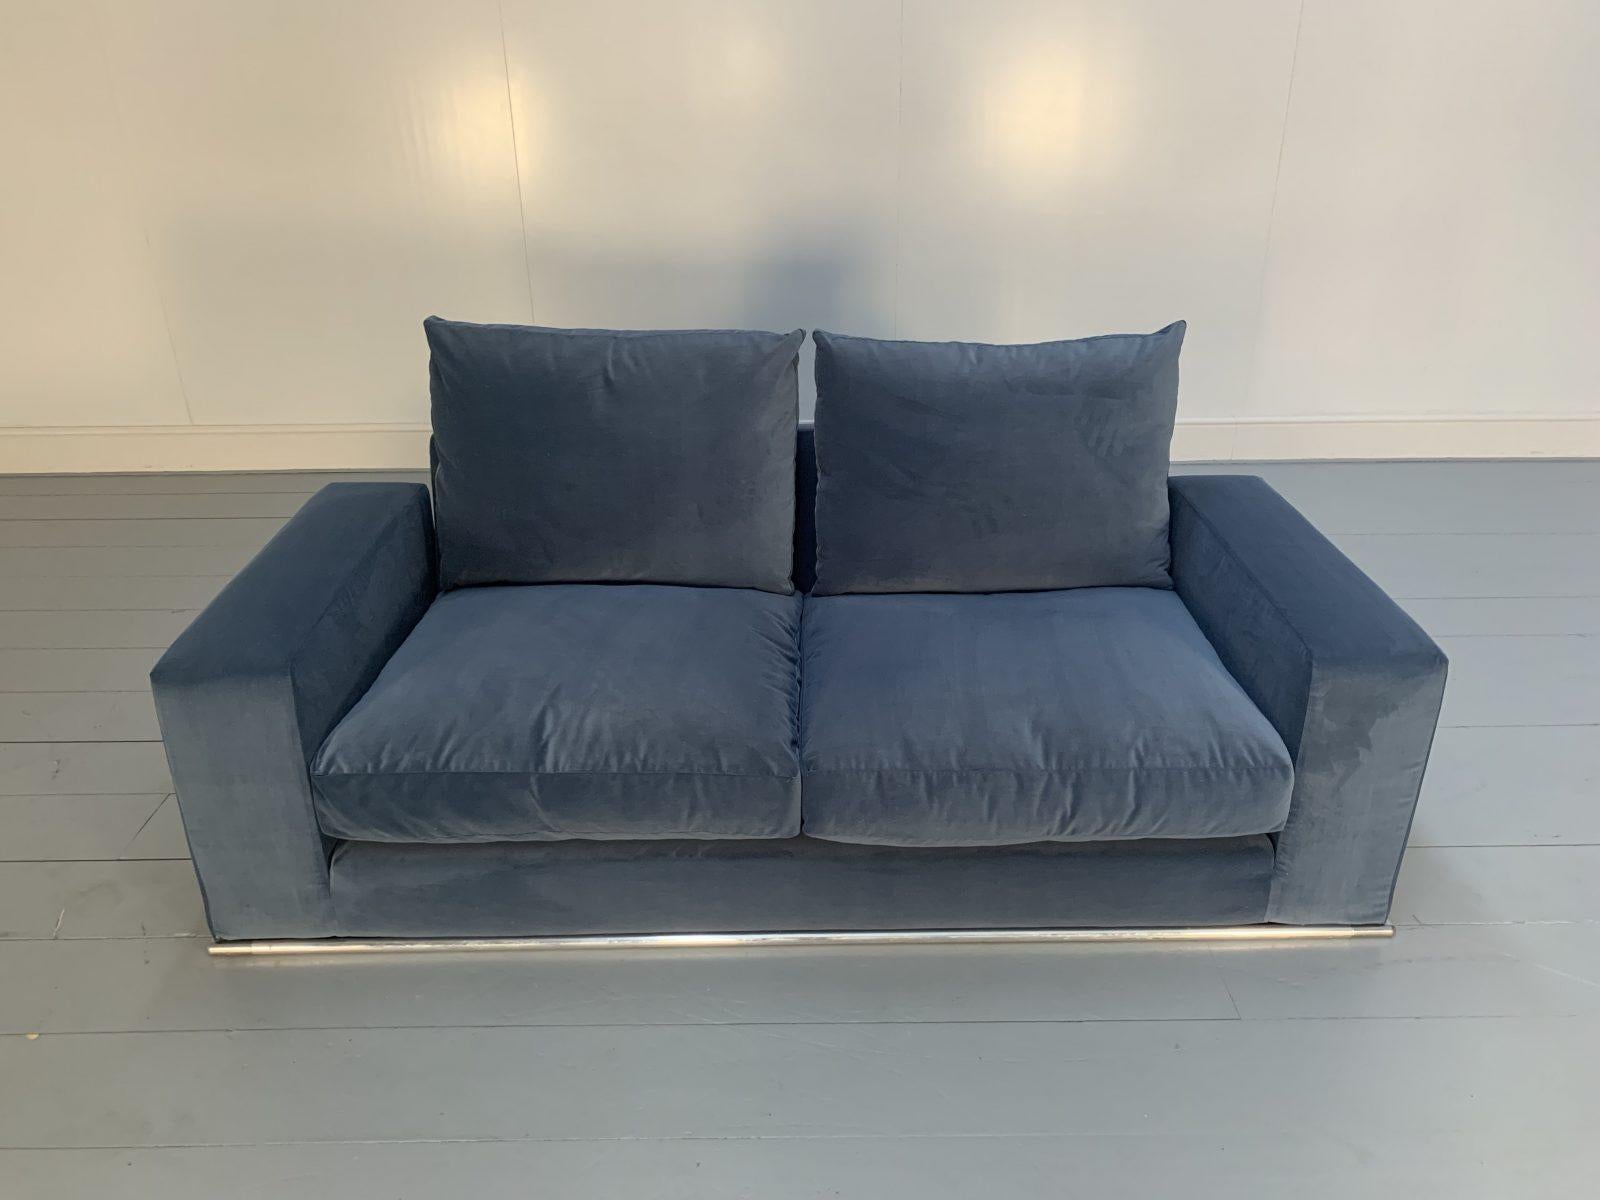 B&B Italia “Marcel” 2.5-Seat Sofa in Blue Velvet In Good Condition For Sale In Barrowford, GB